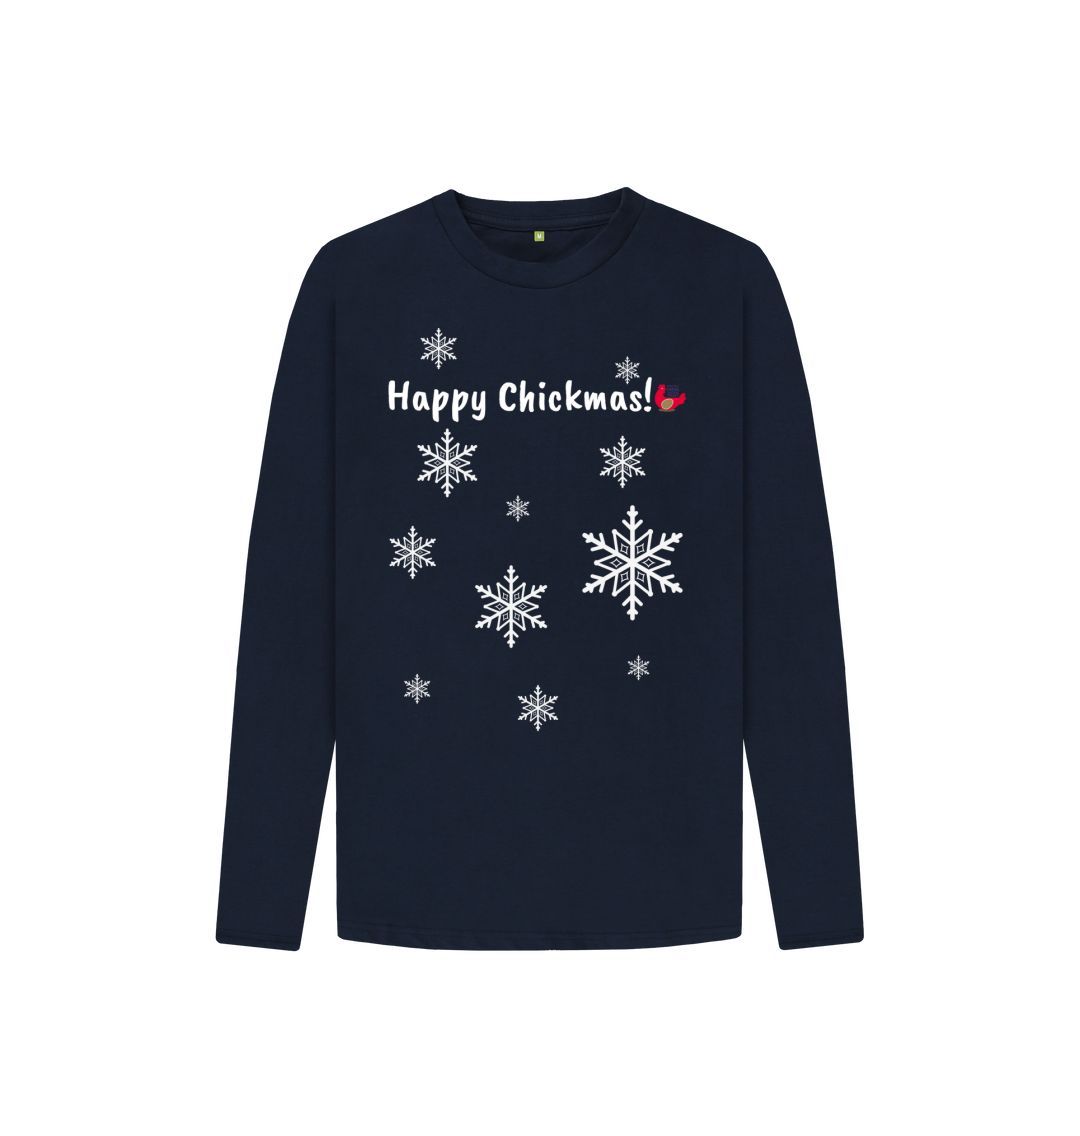 Navy Blue Kids Long Sleeve T-Shirt - Happy Chickmas! Snowflakes